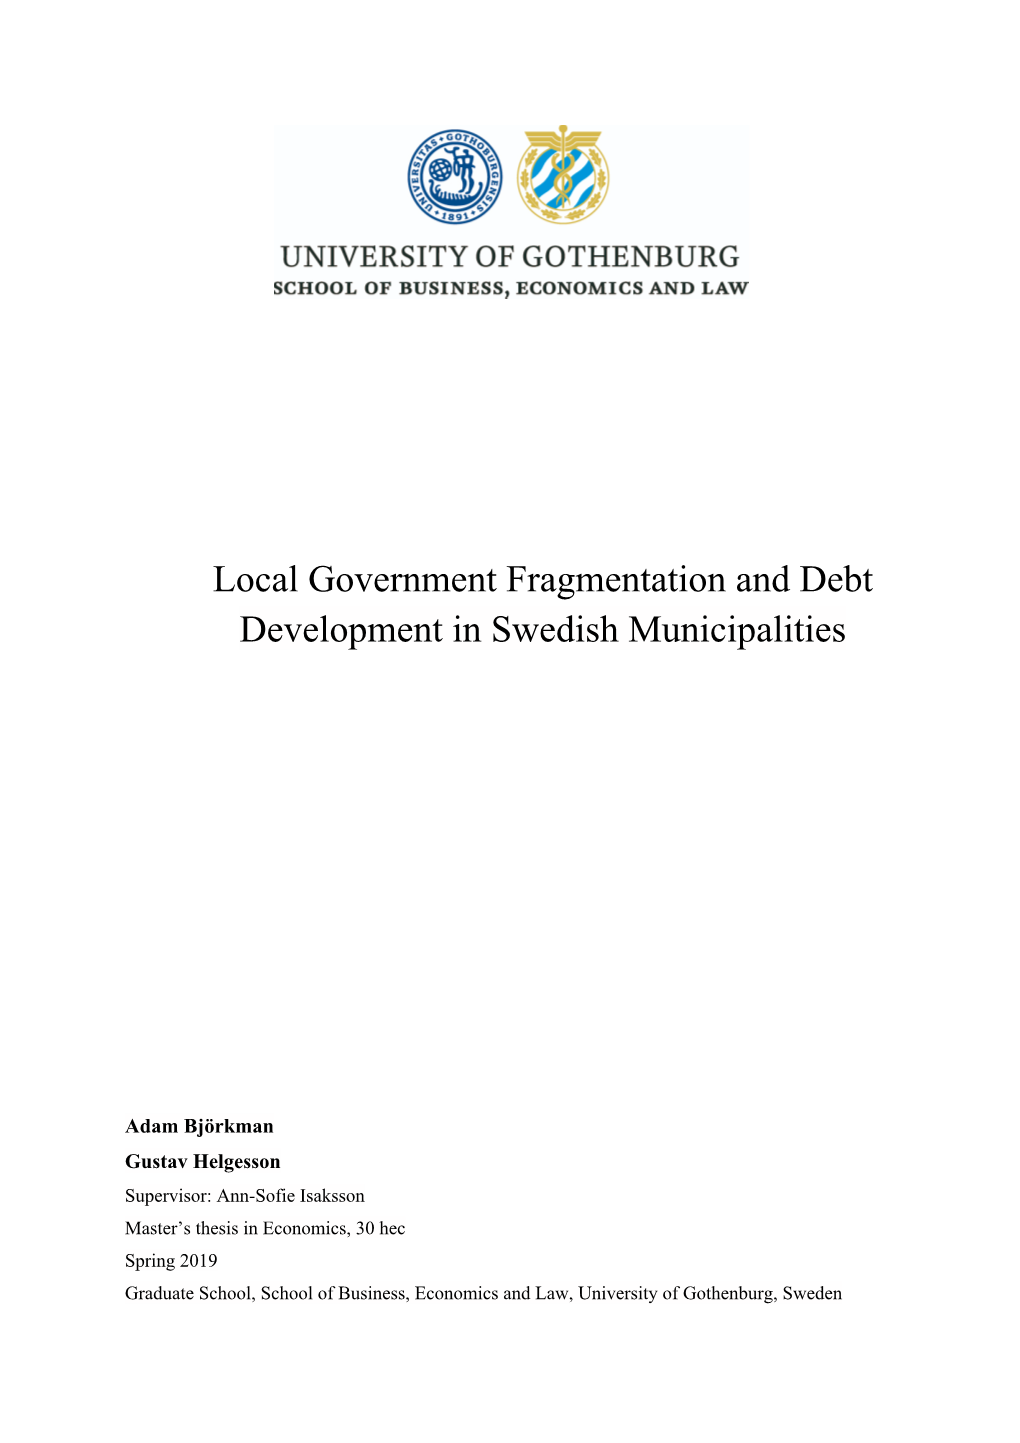 Local Government Fragmentation and Debt Development in Swedish Municipalities